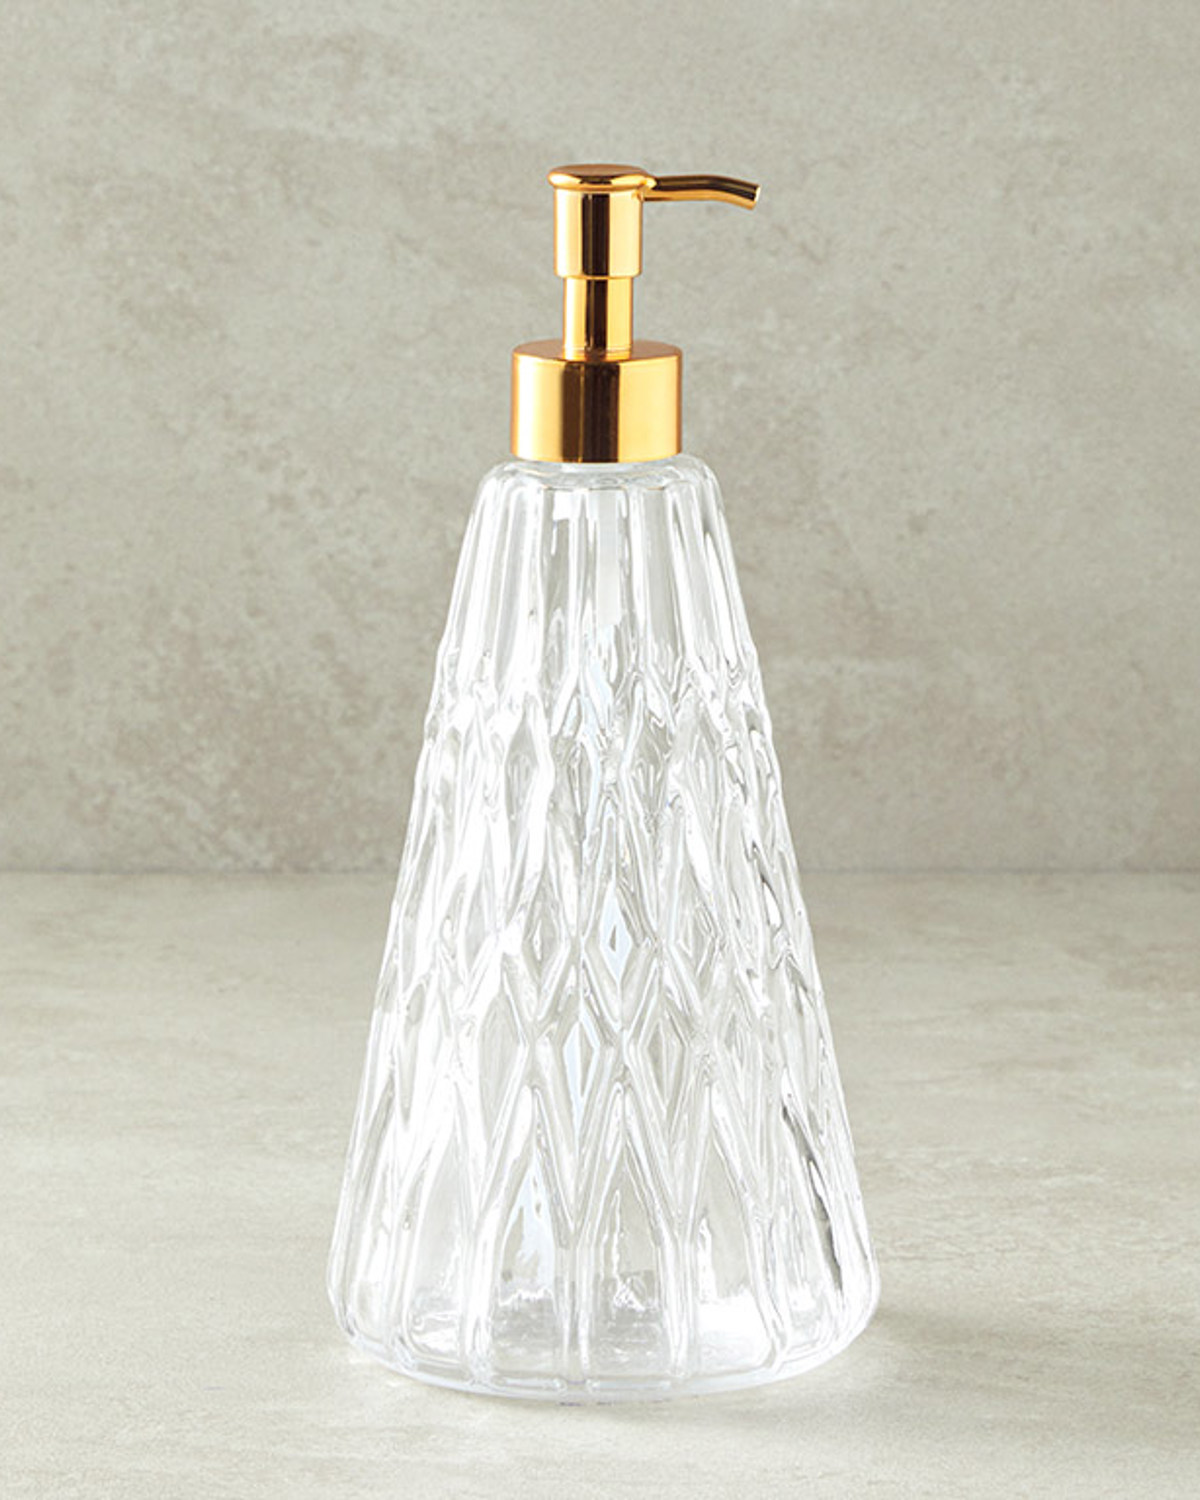 Valeria Glass Bathroom Soap Dispenser 10x22 Cm Gold